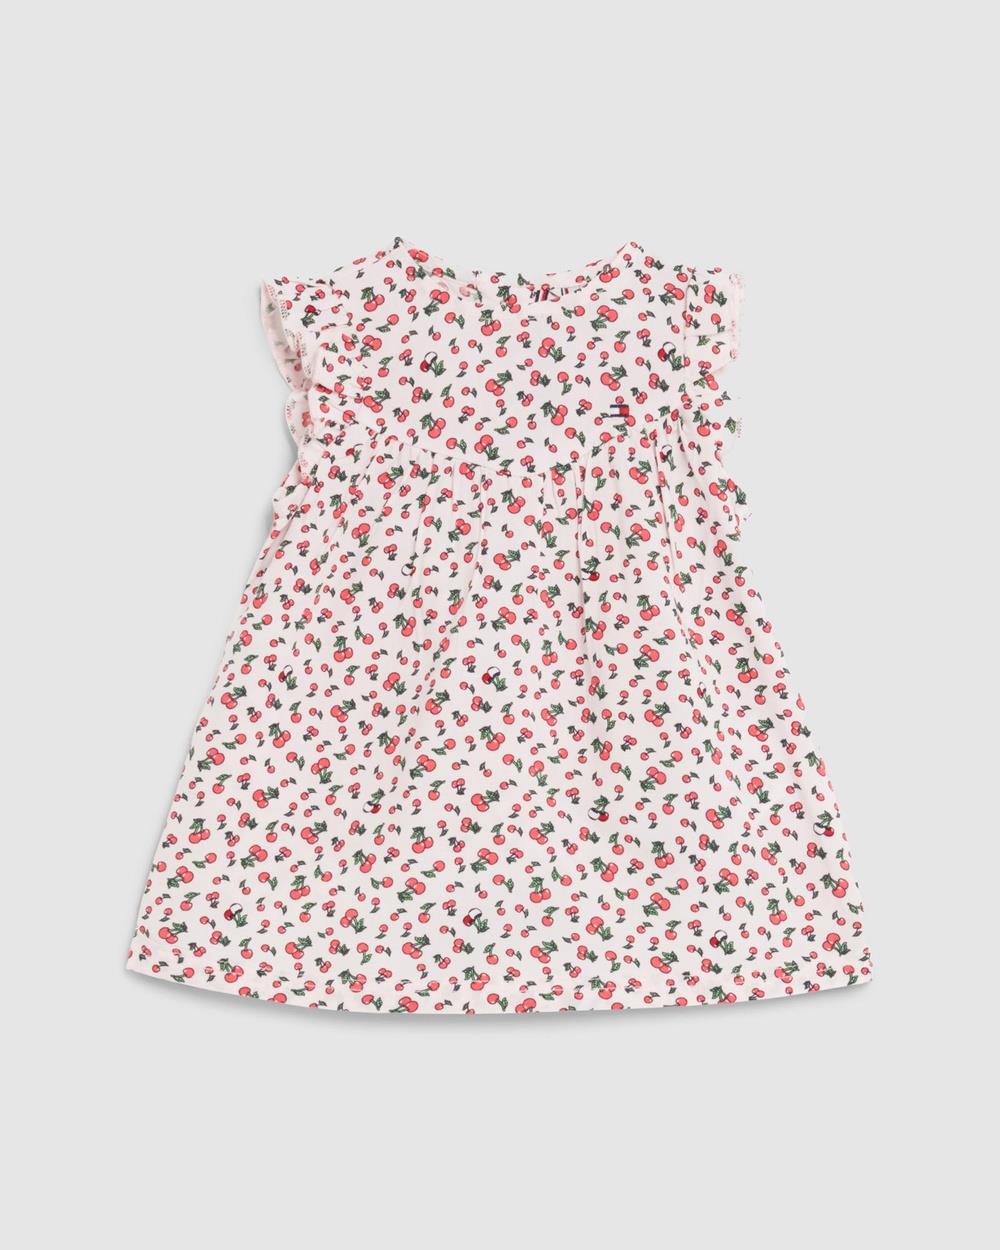 Tommy Hilfiger - Cherry SS Dress Babies - Printed Dresses (Faint Pink Cherry Allover) Cherry SS Dress - Babies